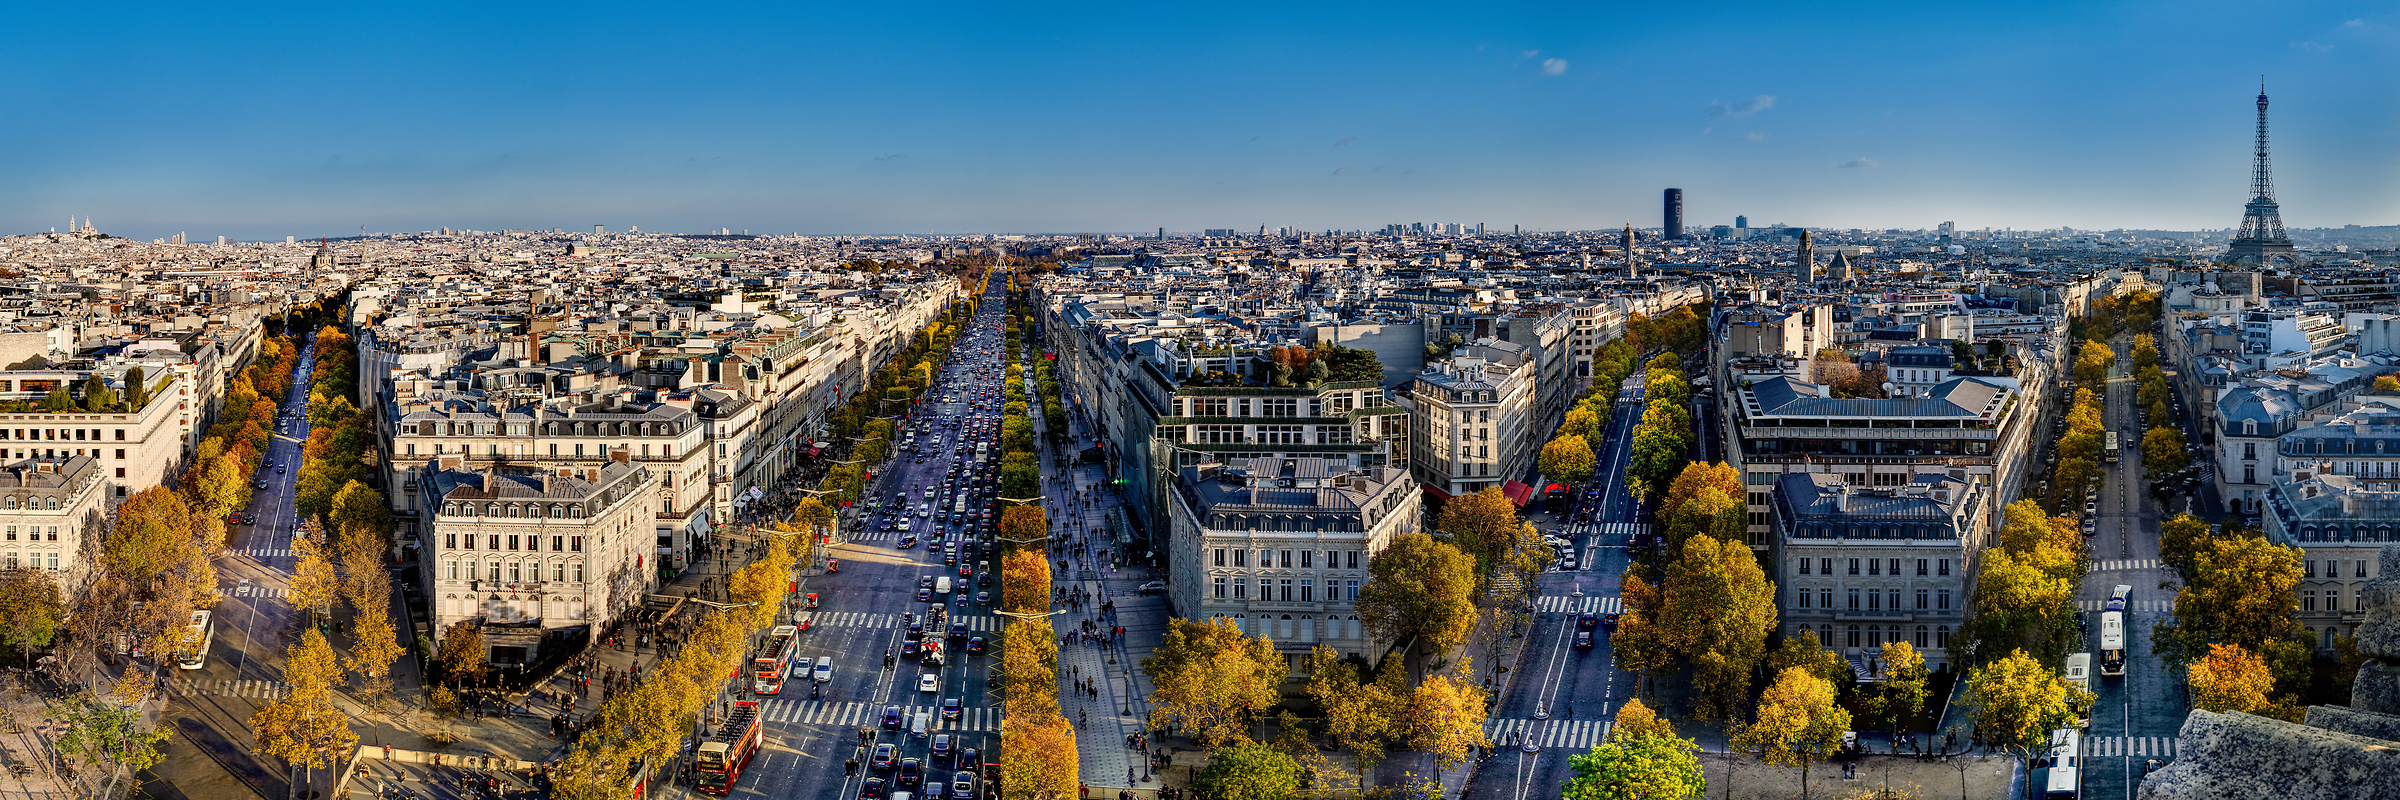 168 megapixels! A very high resolution, large-format VAST photo print of the Paris skyline; cityscape photograph created by Tim Lo Monaco at the Arc de Triomphe, Paris, France.